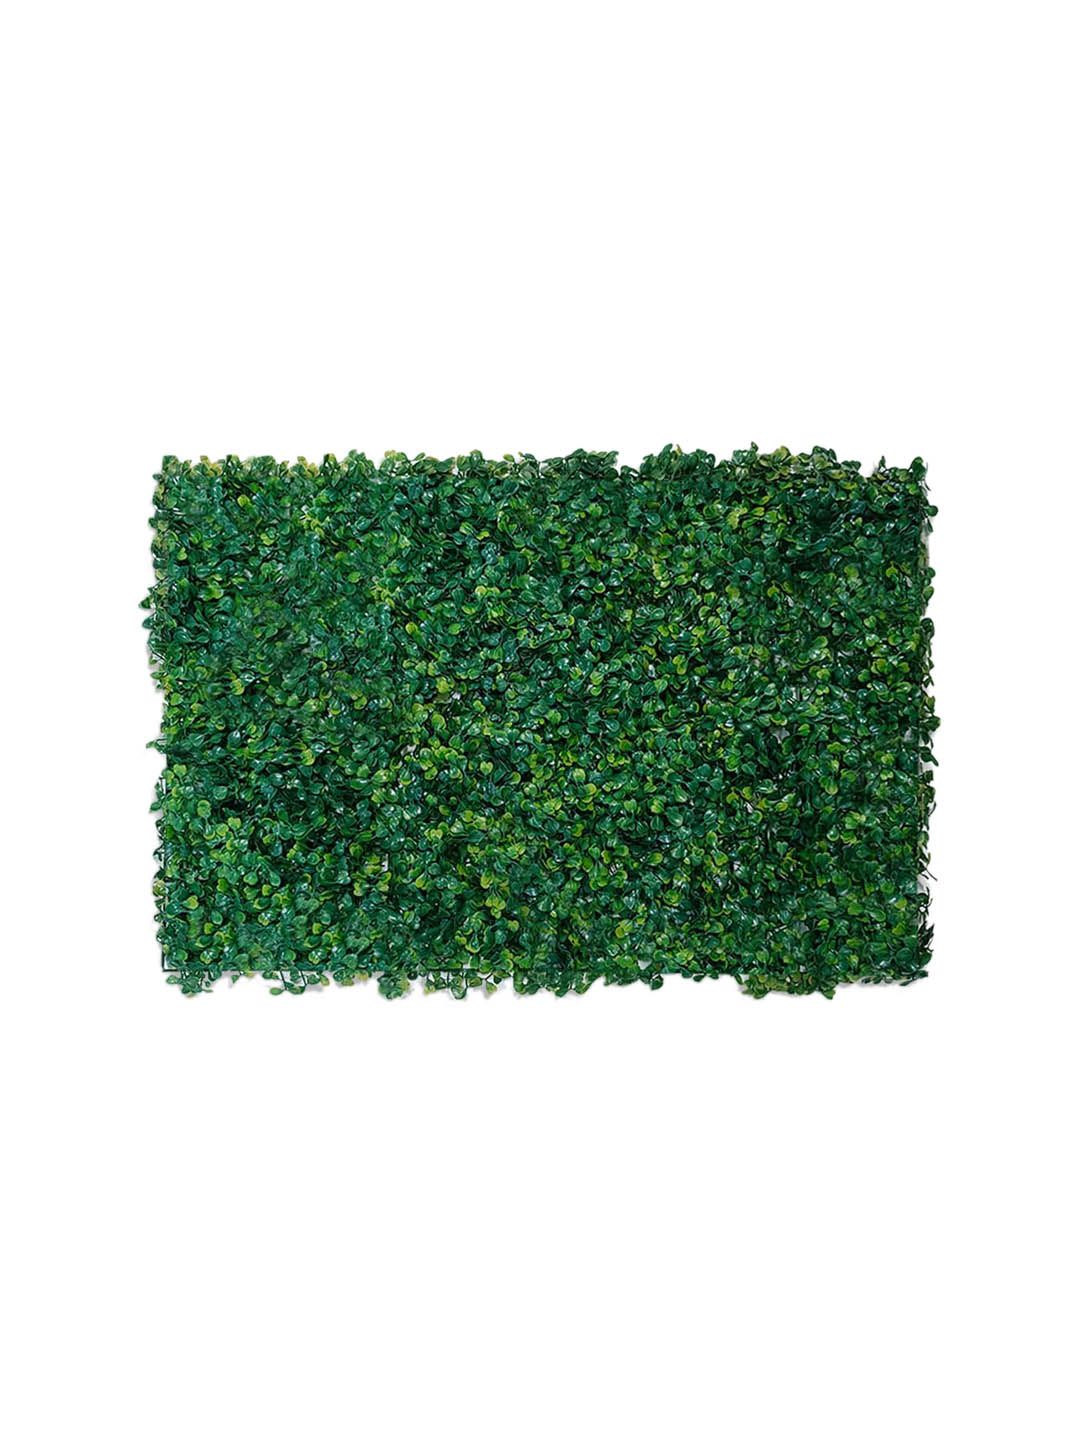 Art Street Green Floor Artificial Grass Price in India